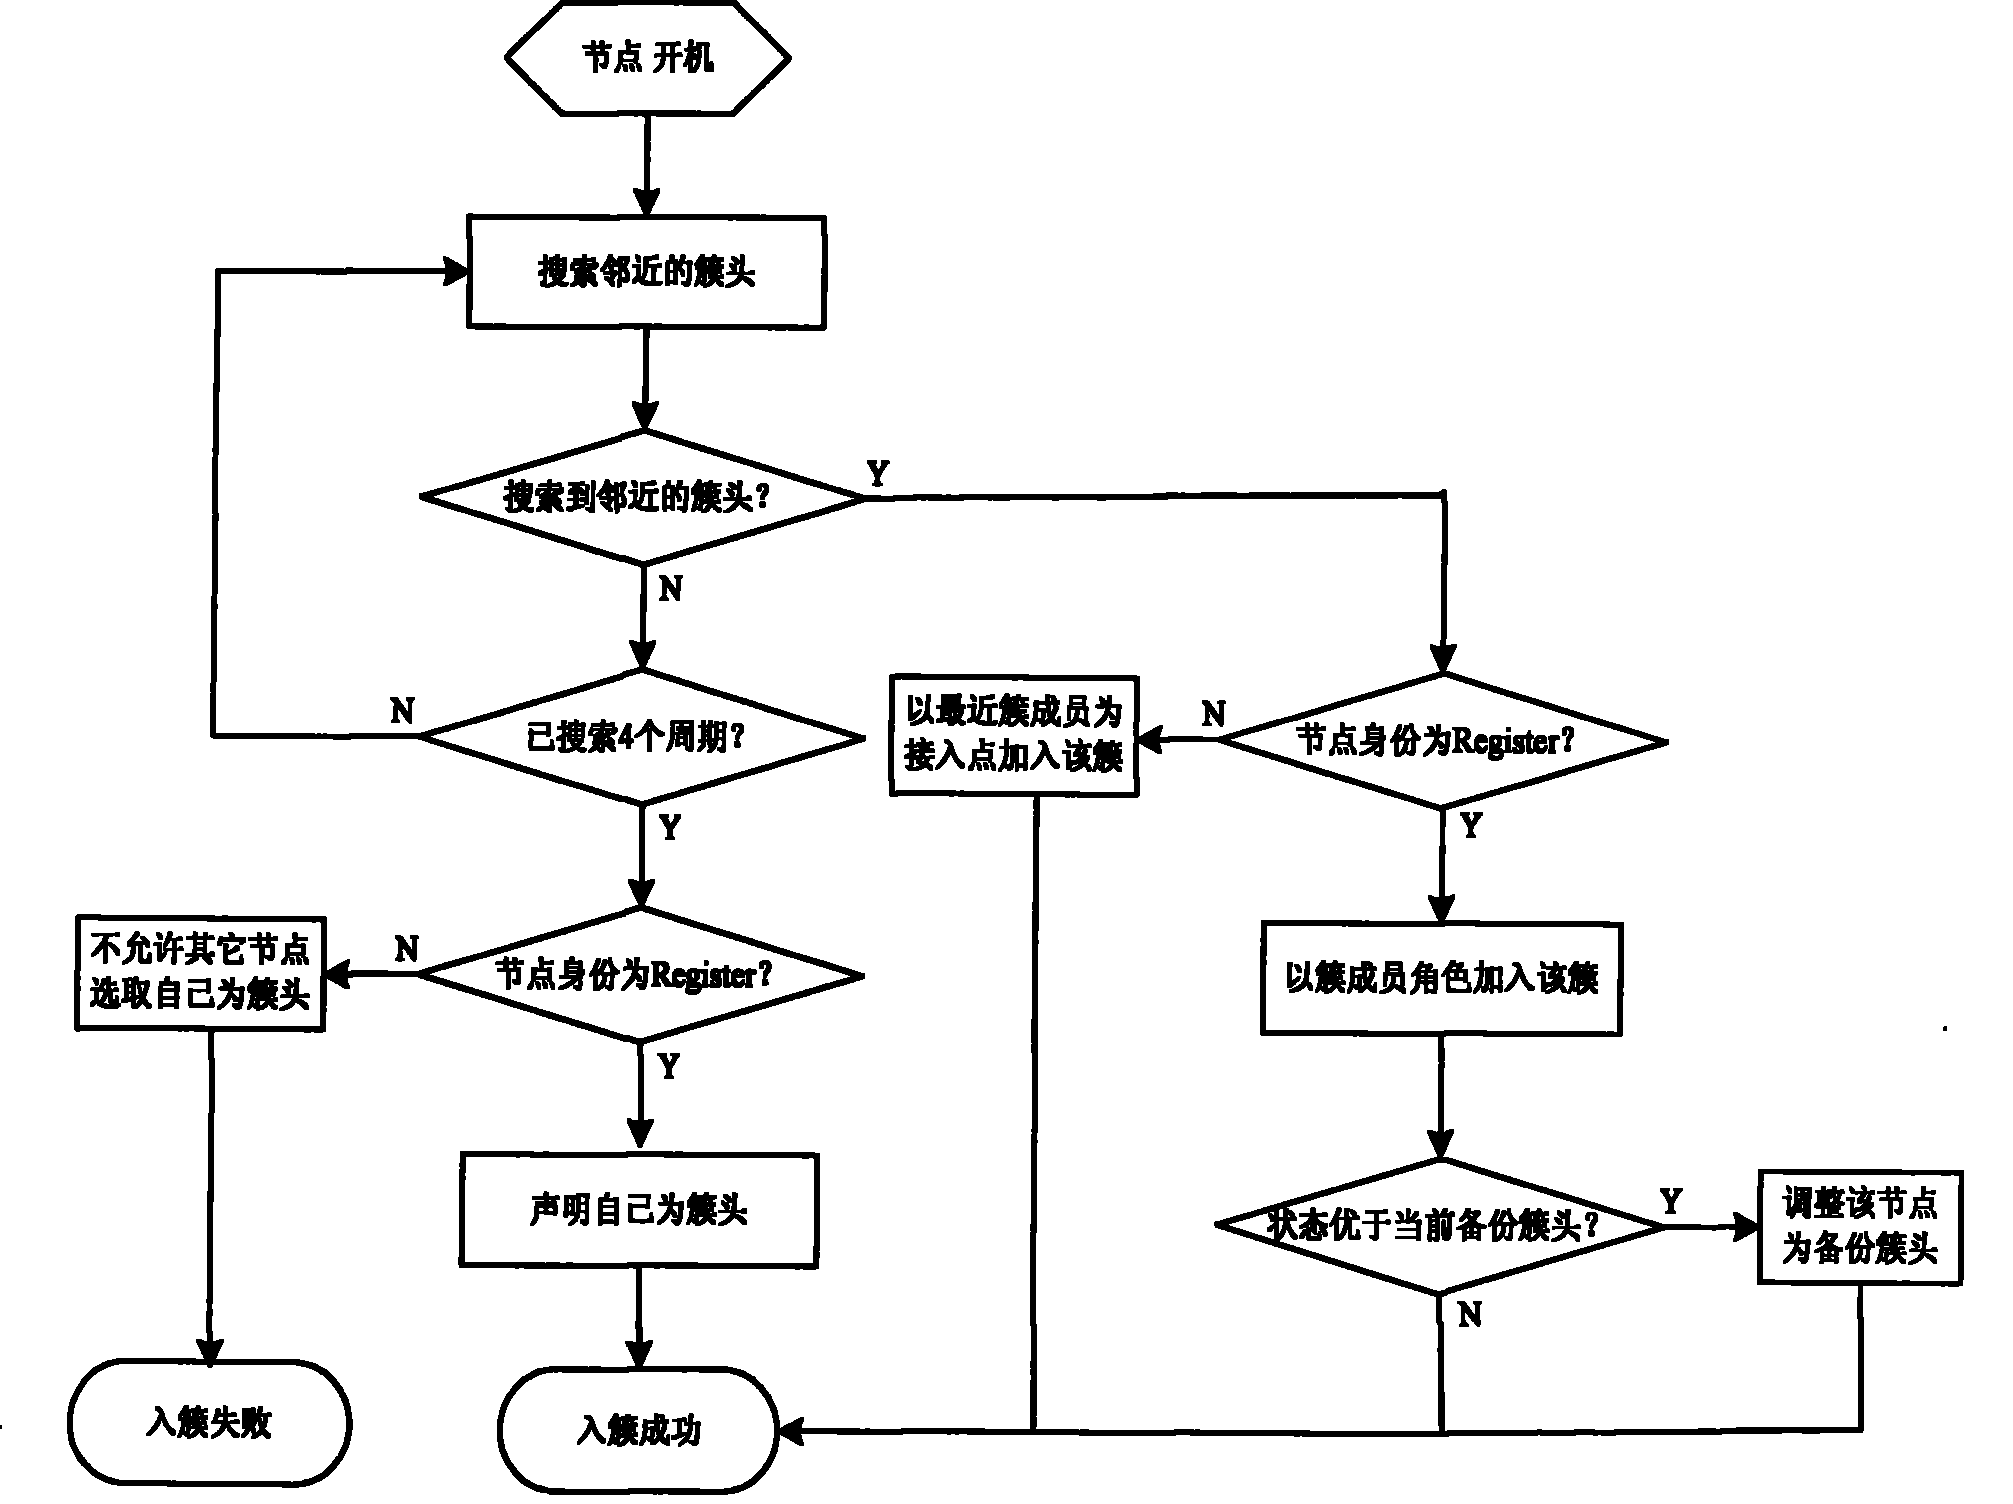 Mobile self-organizing network cluster dividing method based on state mechanism